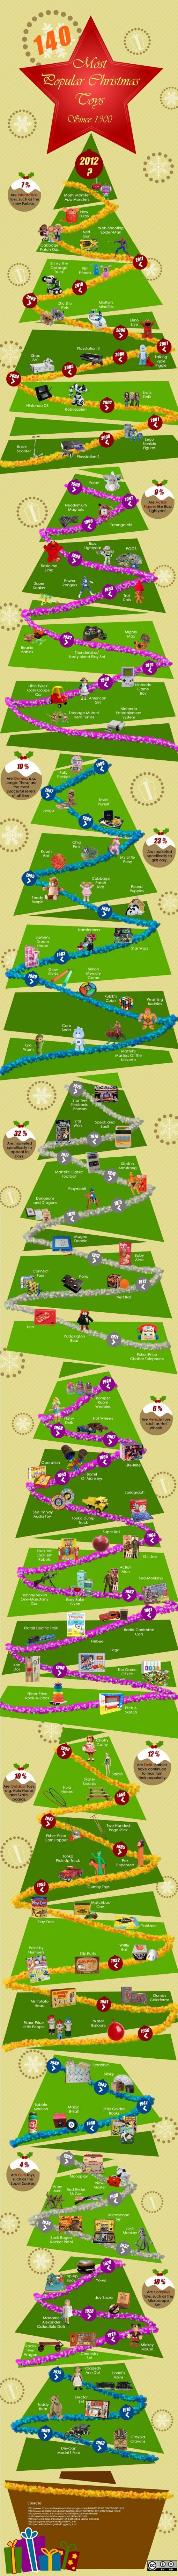 140-most-popular-christmas-toys-since-19.jpg